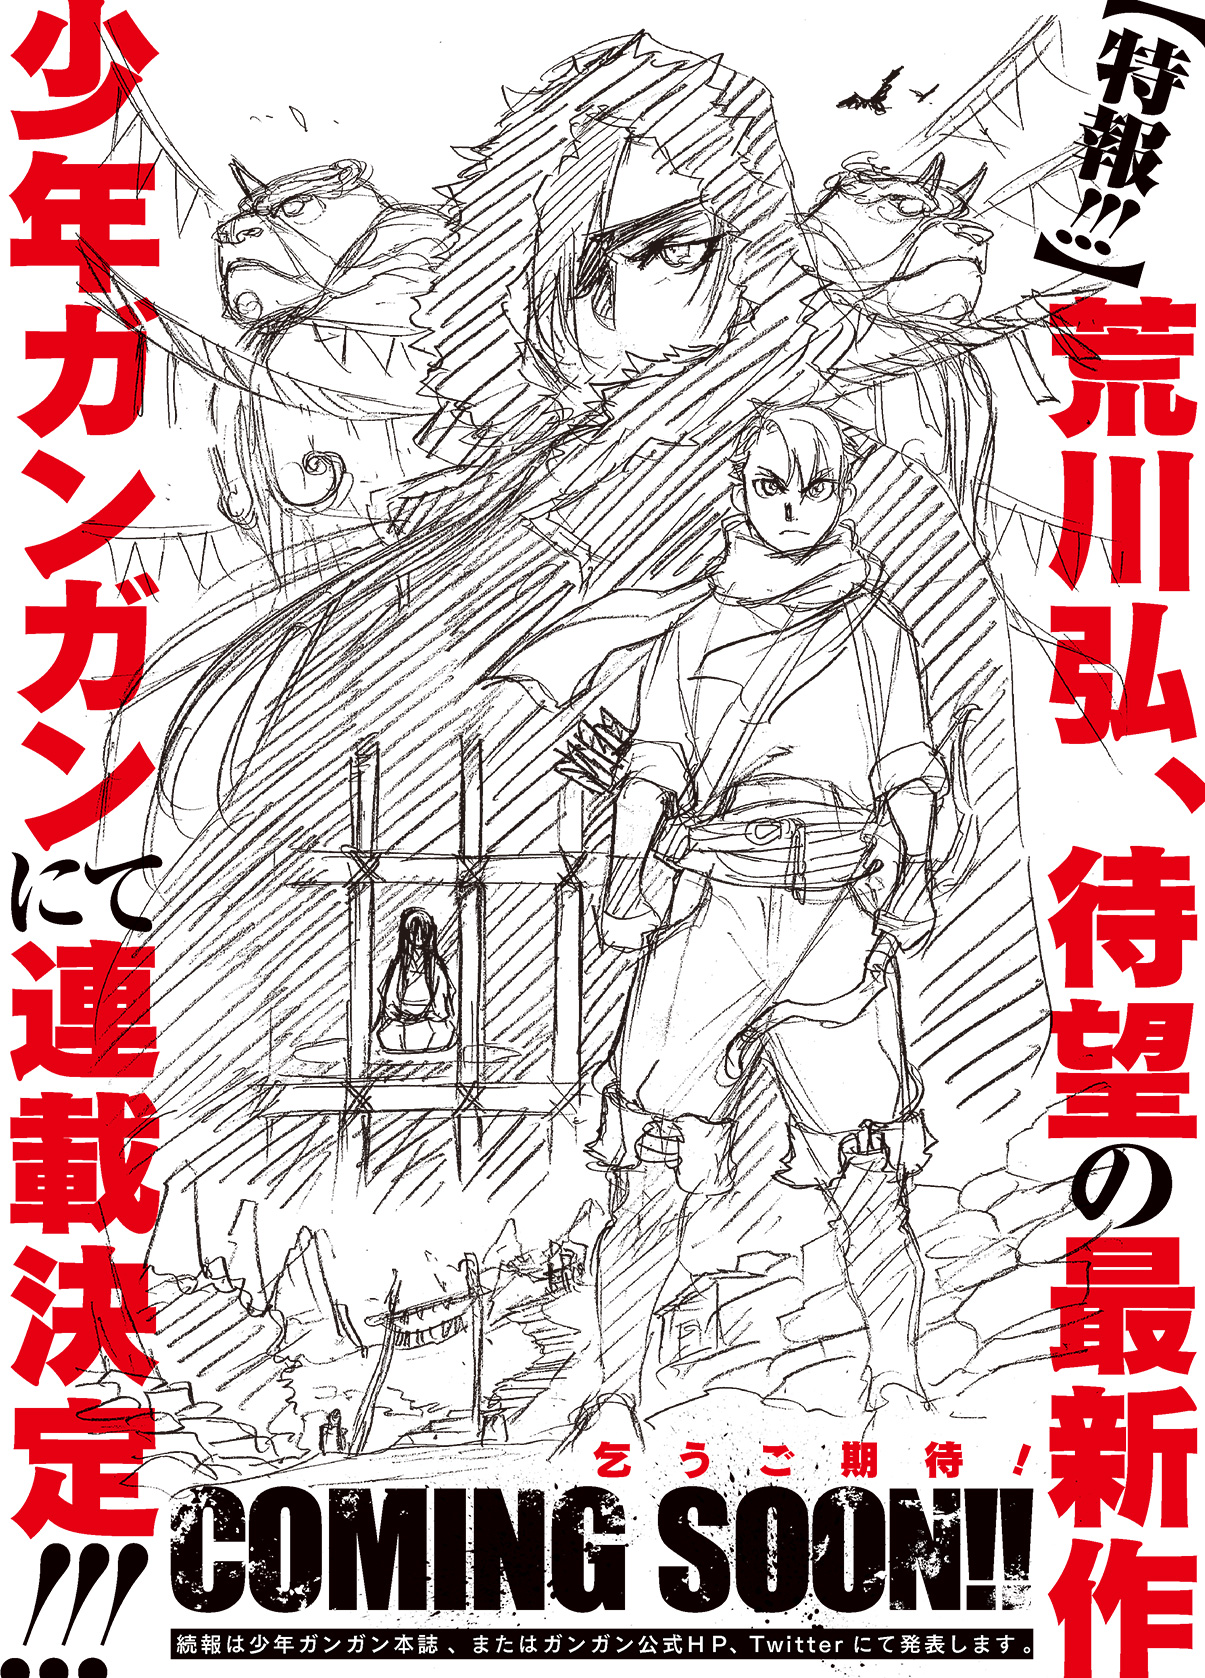 Fullmetal Alchemist 20th ANNIVERSARY Book - Anime Manga JP